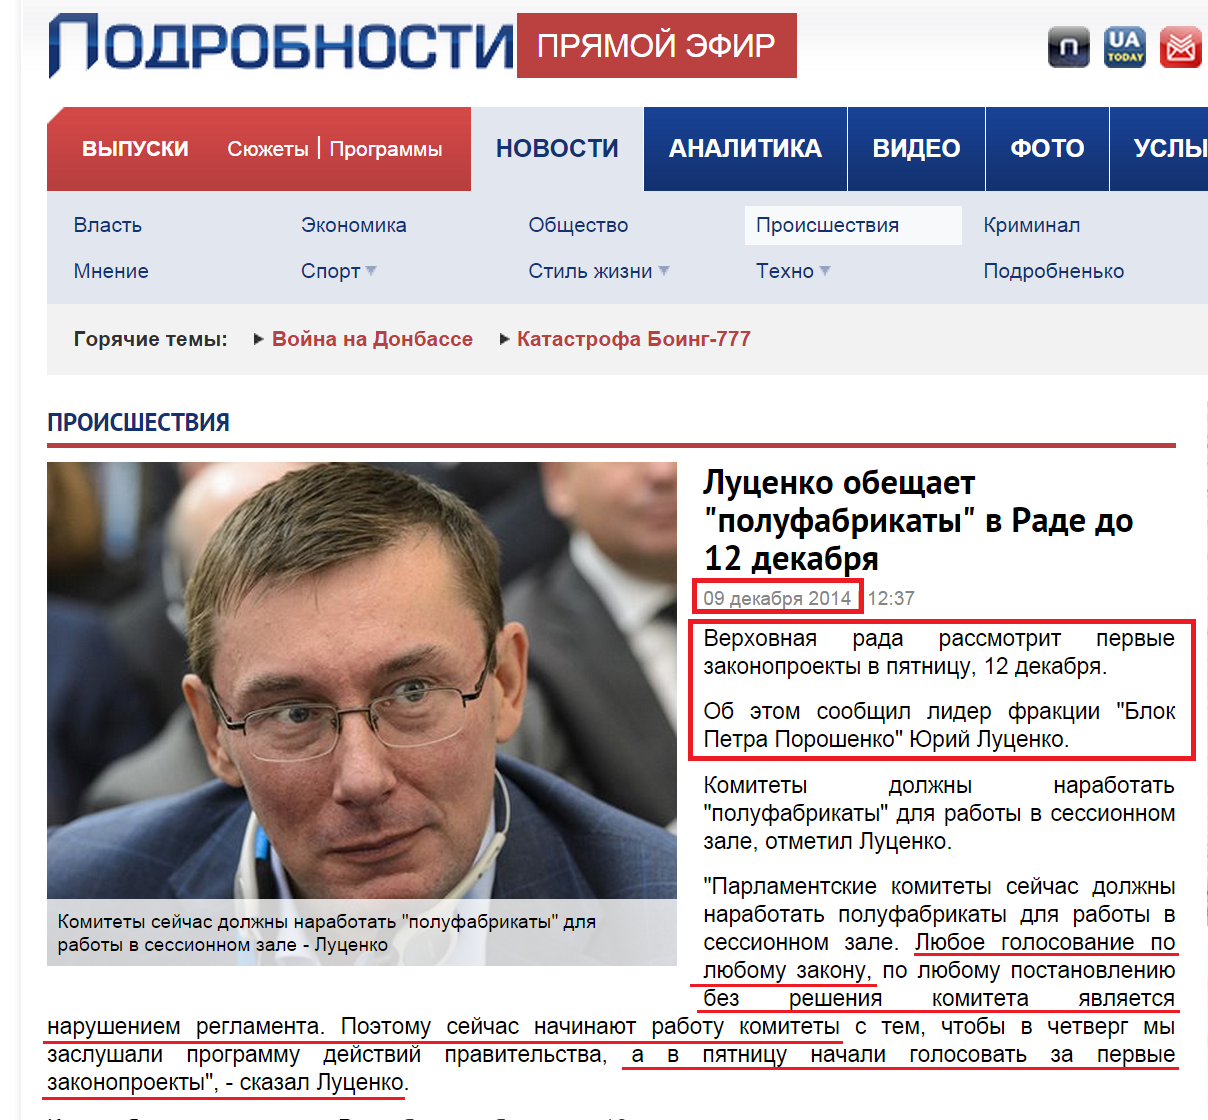 http://podrobnosti.ua/accidents/2014/12/09/1006600.html